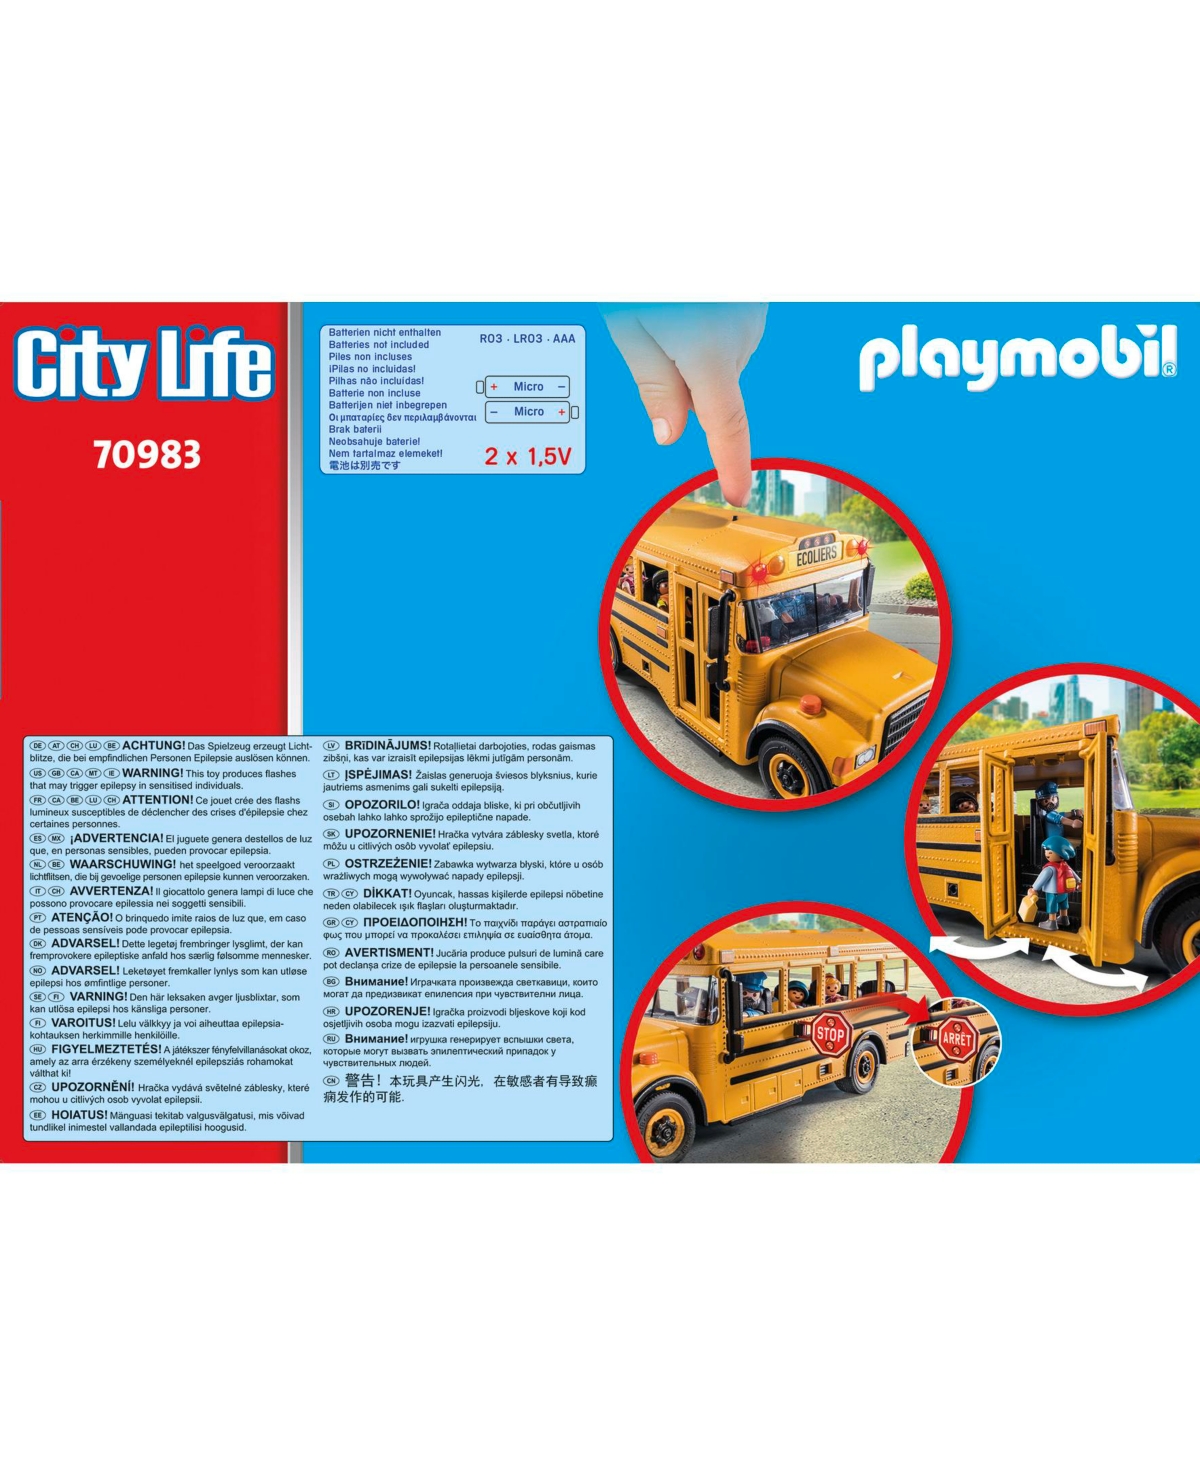 Shop Playmobil School Bus In Multi